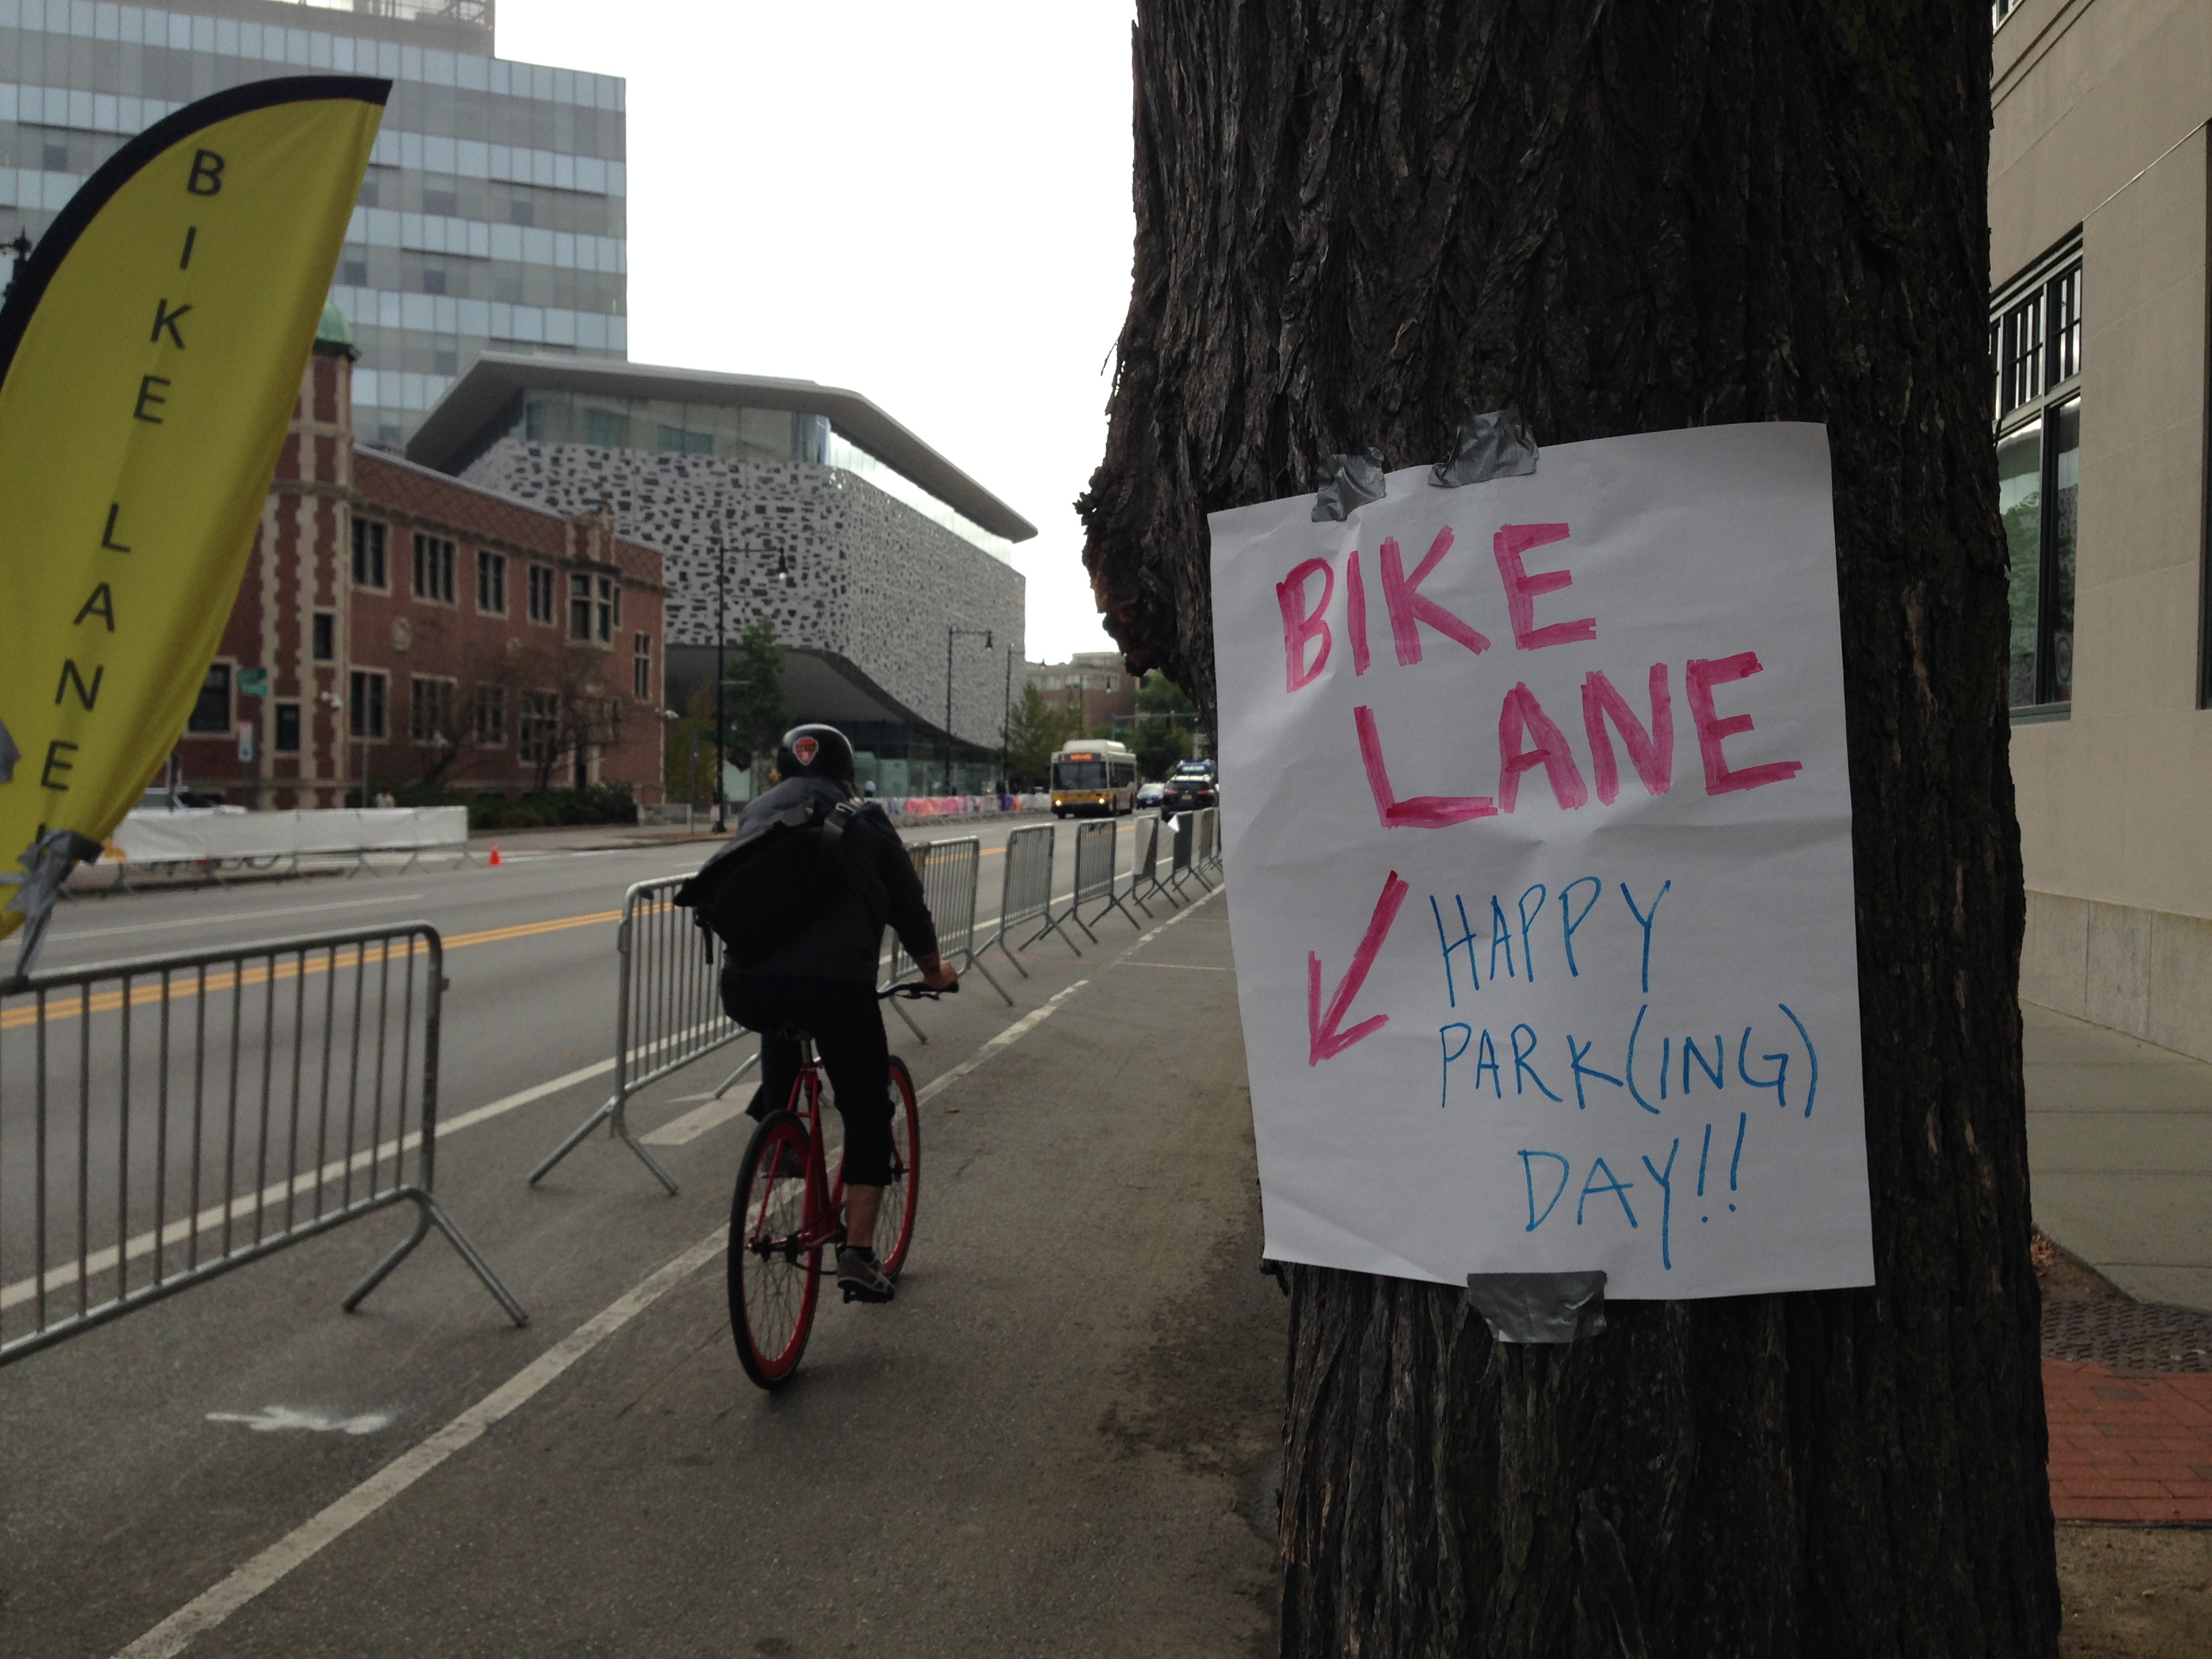 Parking spots repurposed as a protected bike lane